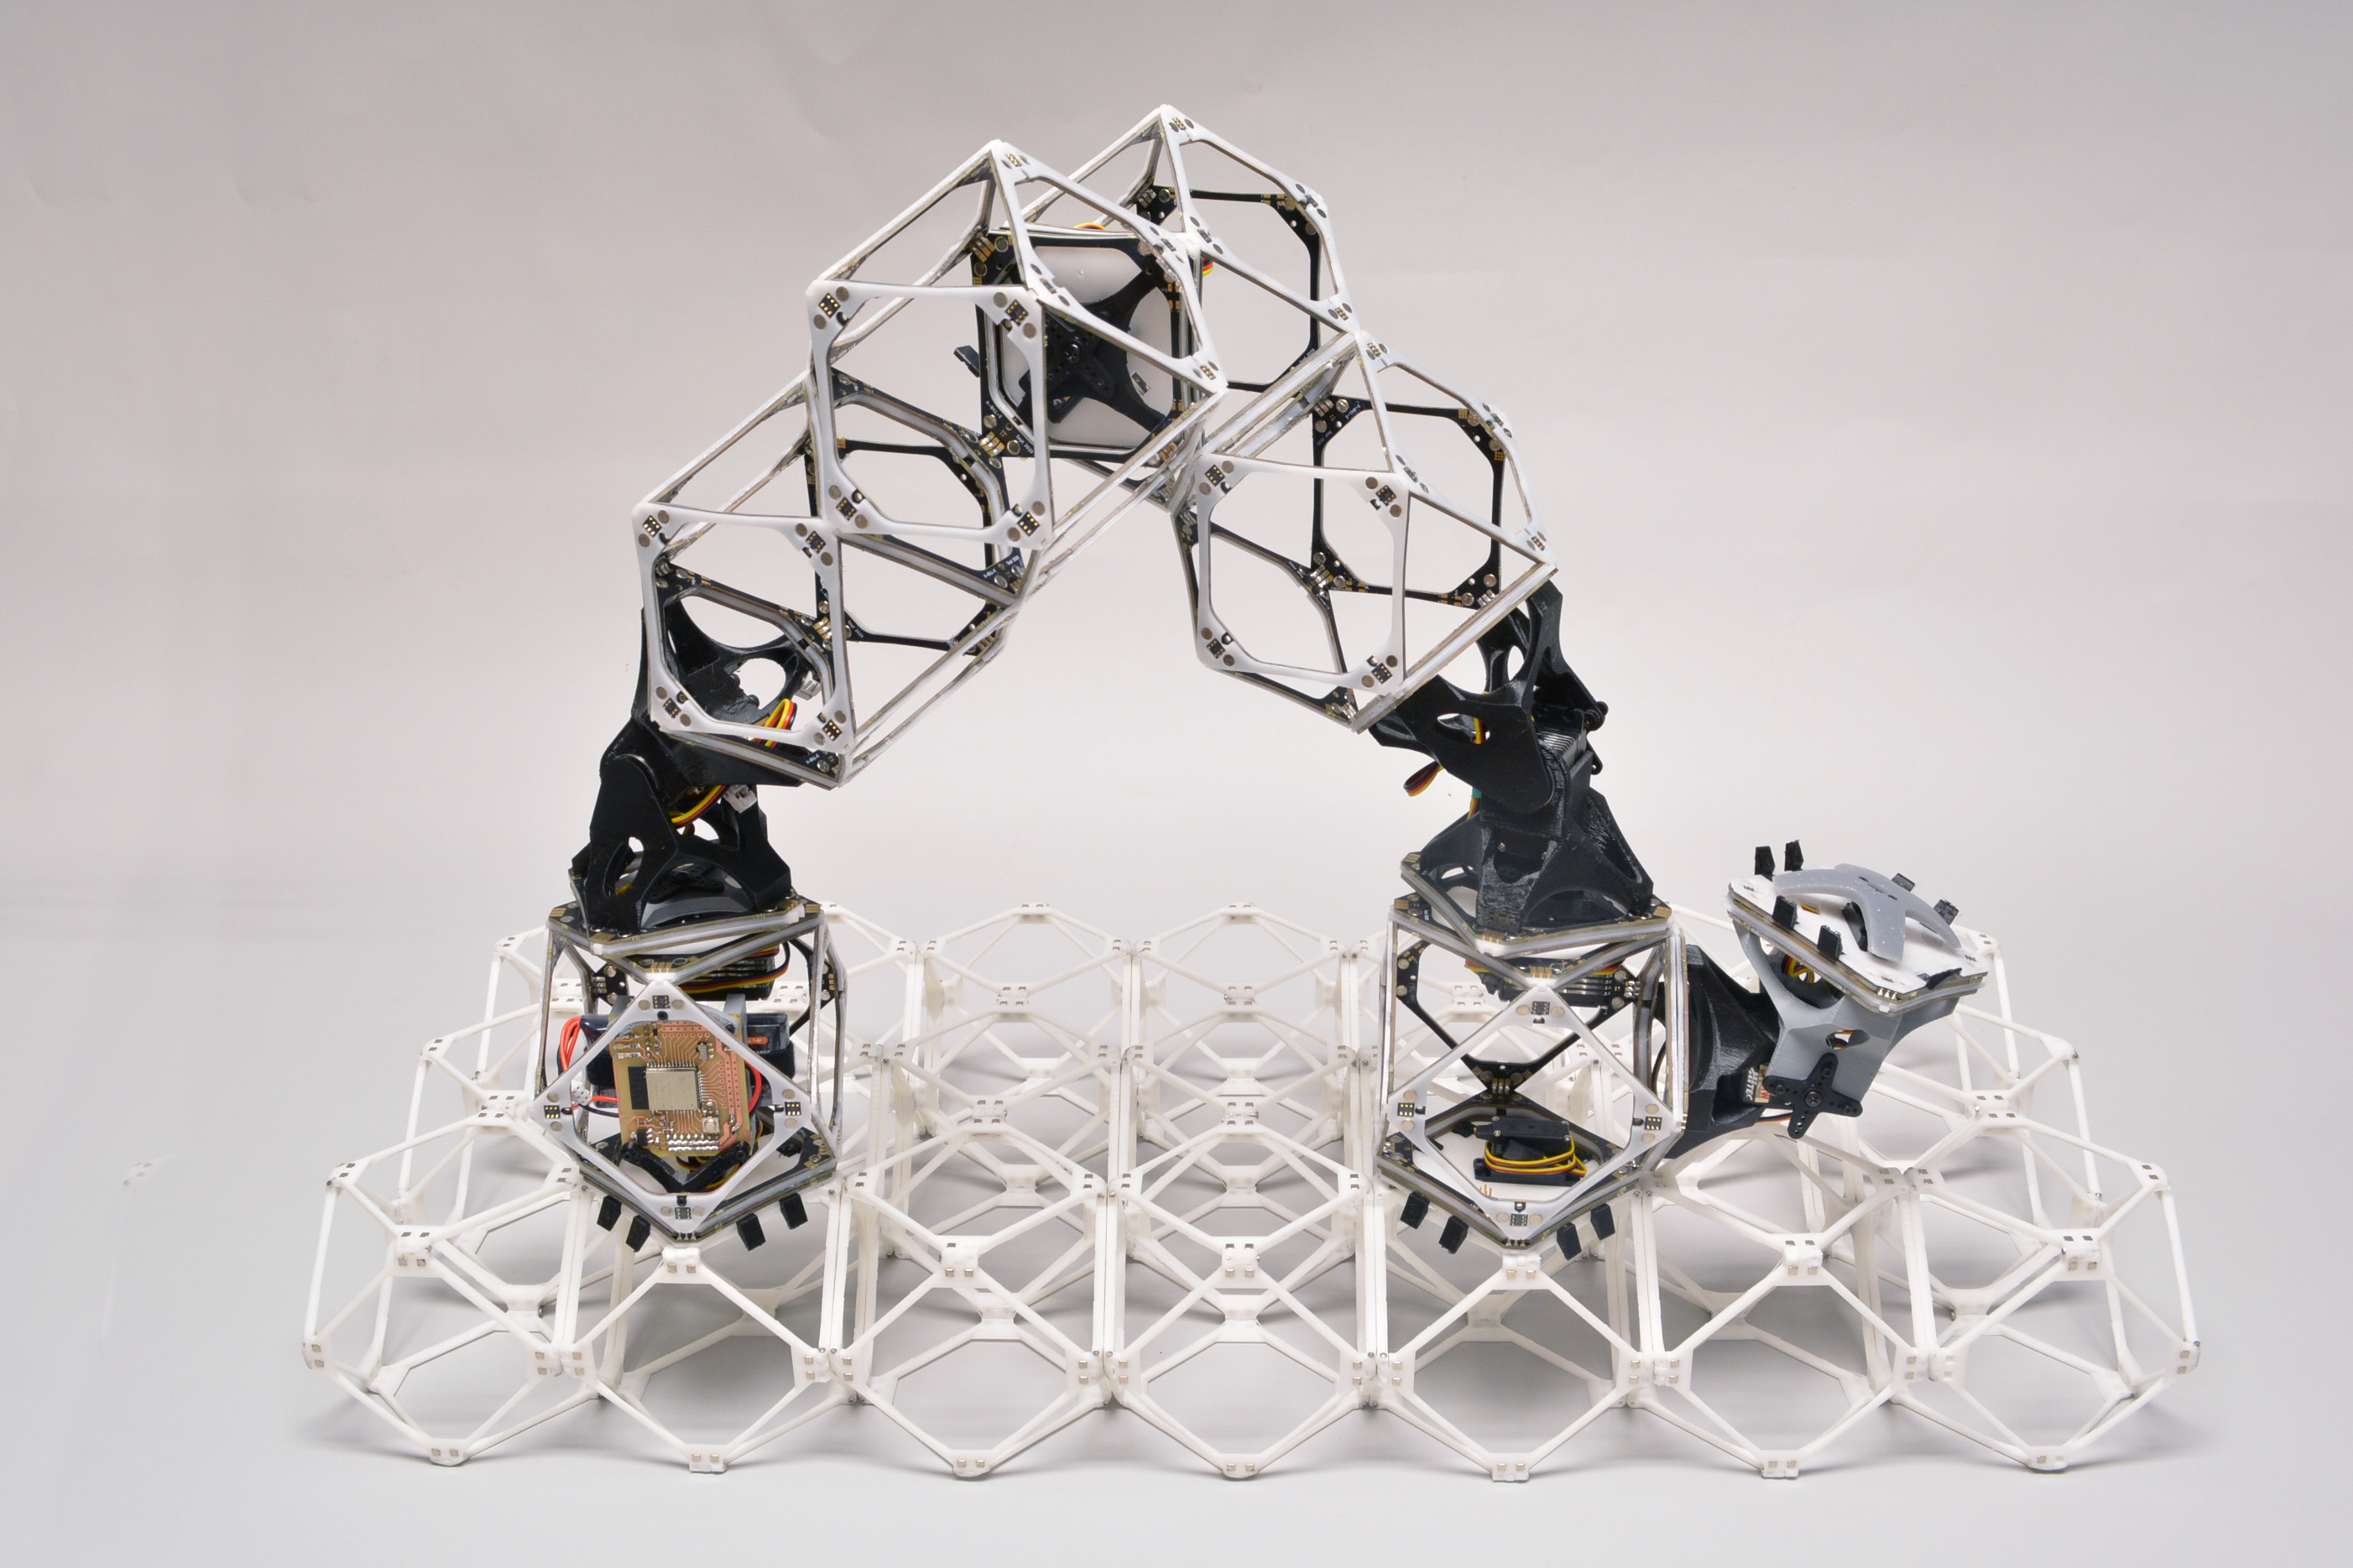 Flocks of assembler robots show potential for making larger | MIT News | Massachusetts Institute of Technology